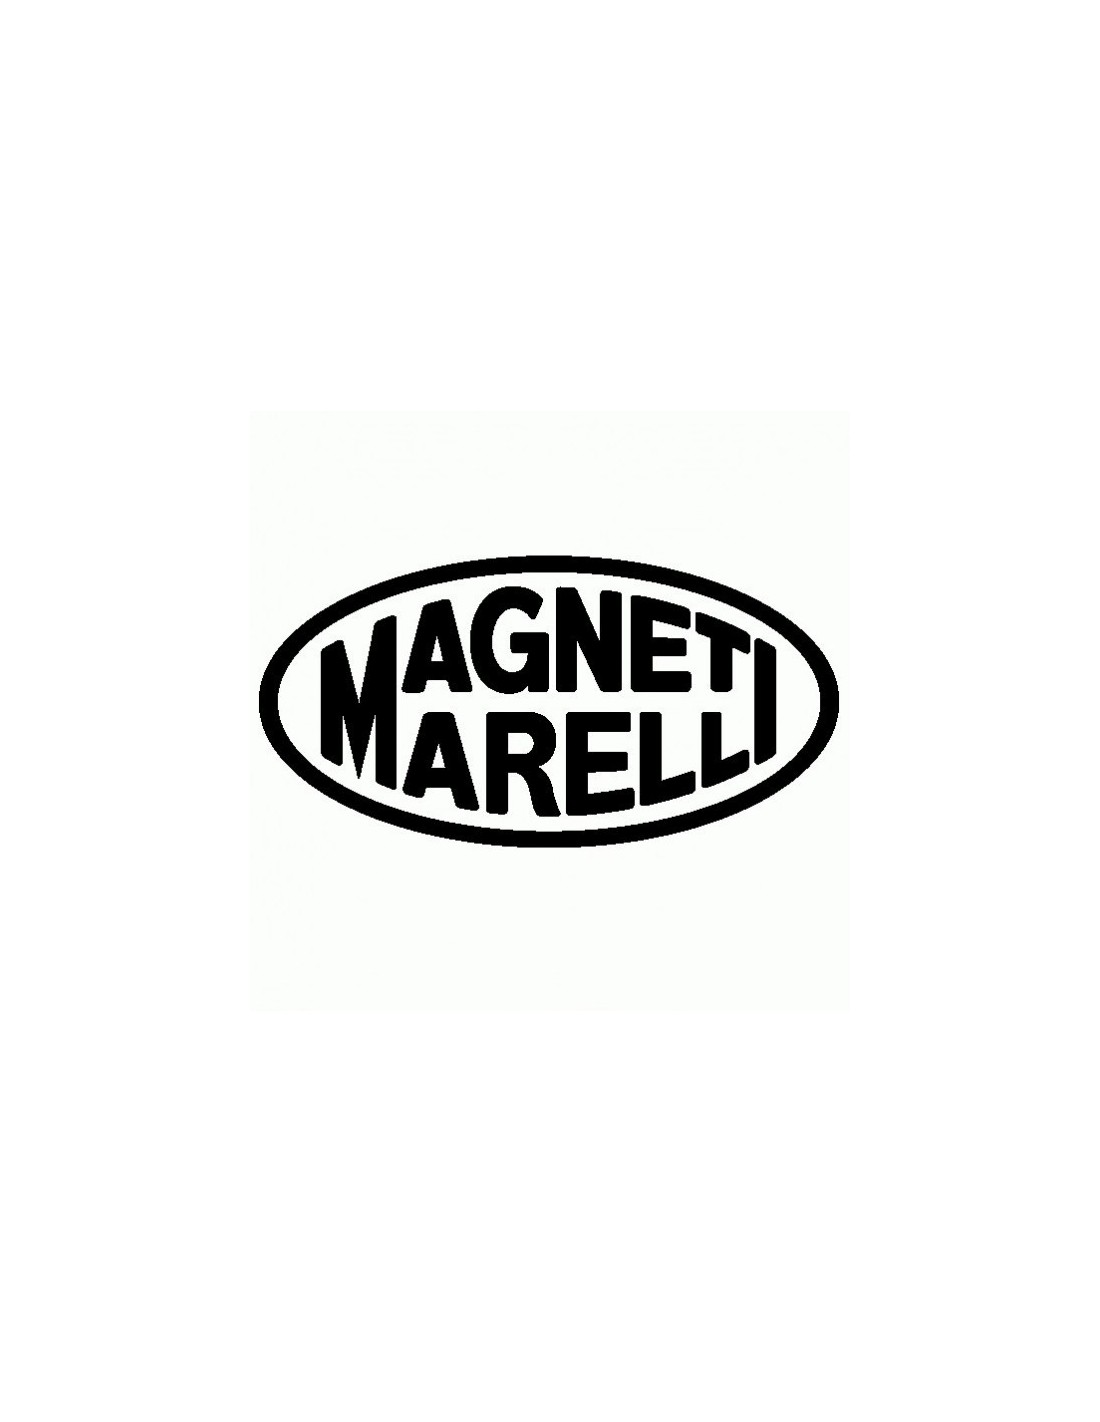 https://adesivistore.com/387-thickbox_default/magneti-marelli-adesivo-prespaziato.jpg